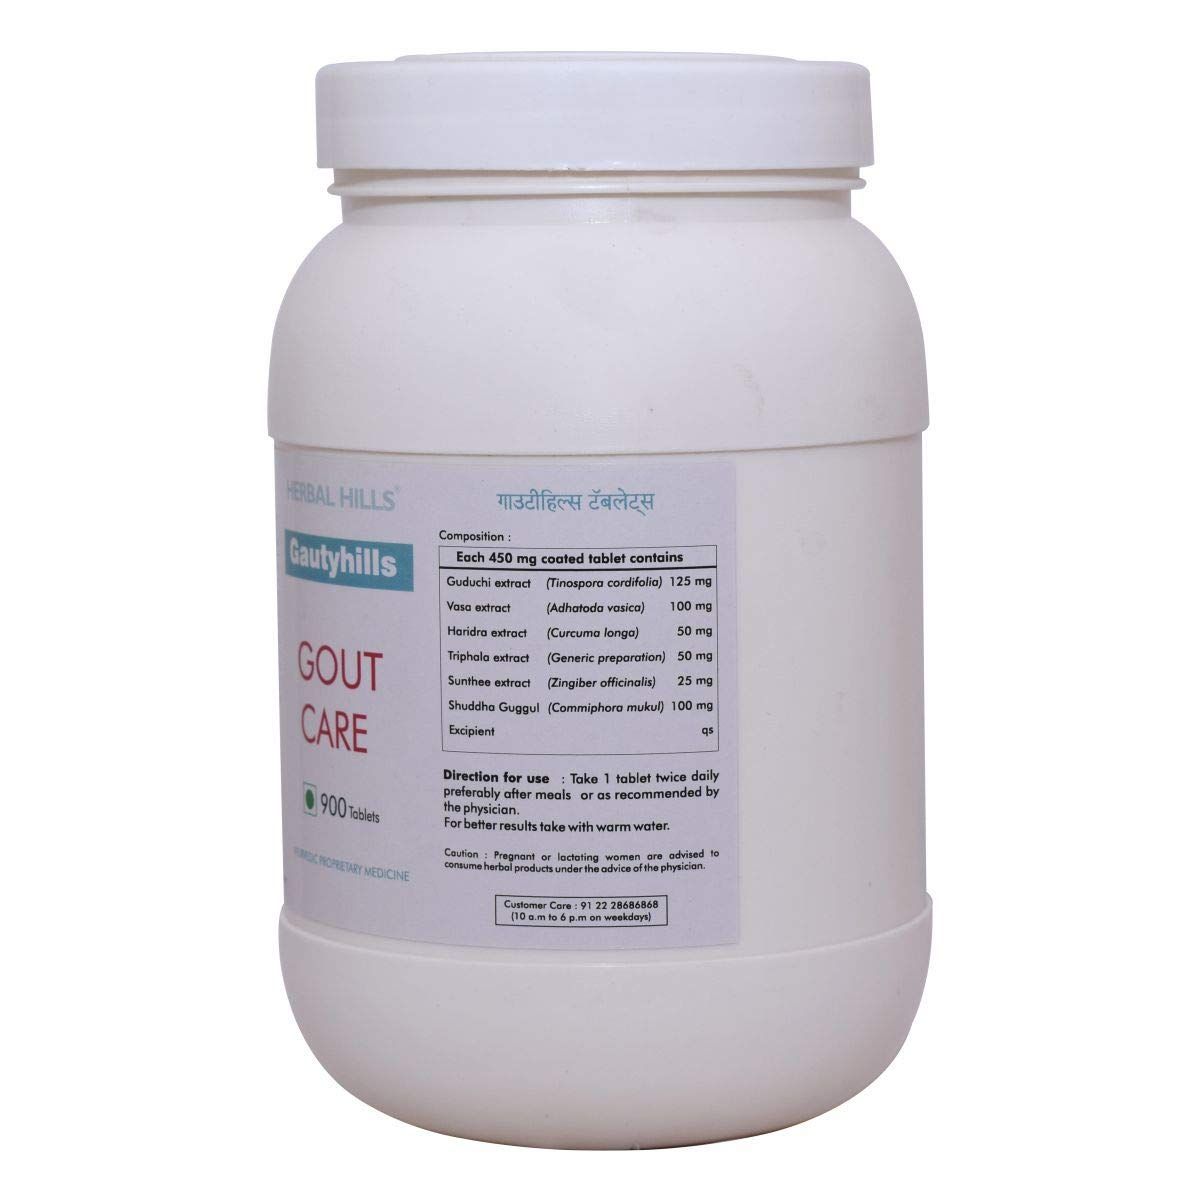 Herbal Hills Uric Acid Supplement Image